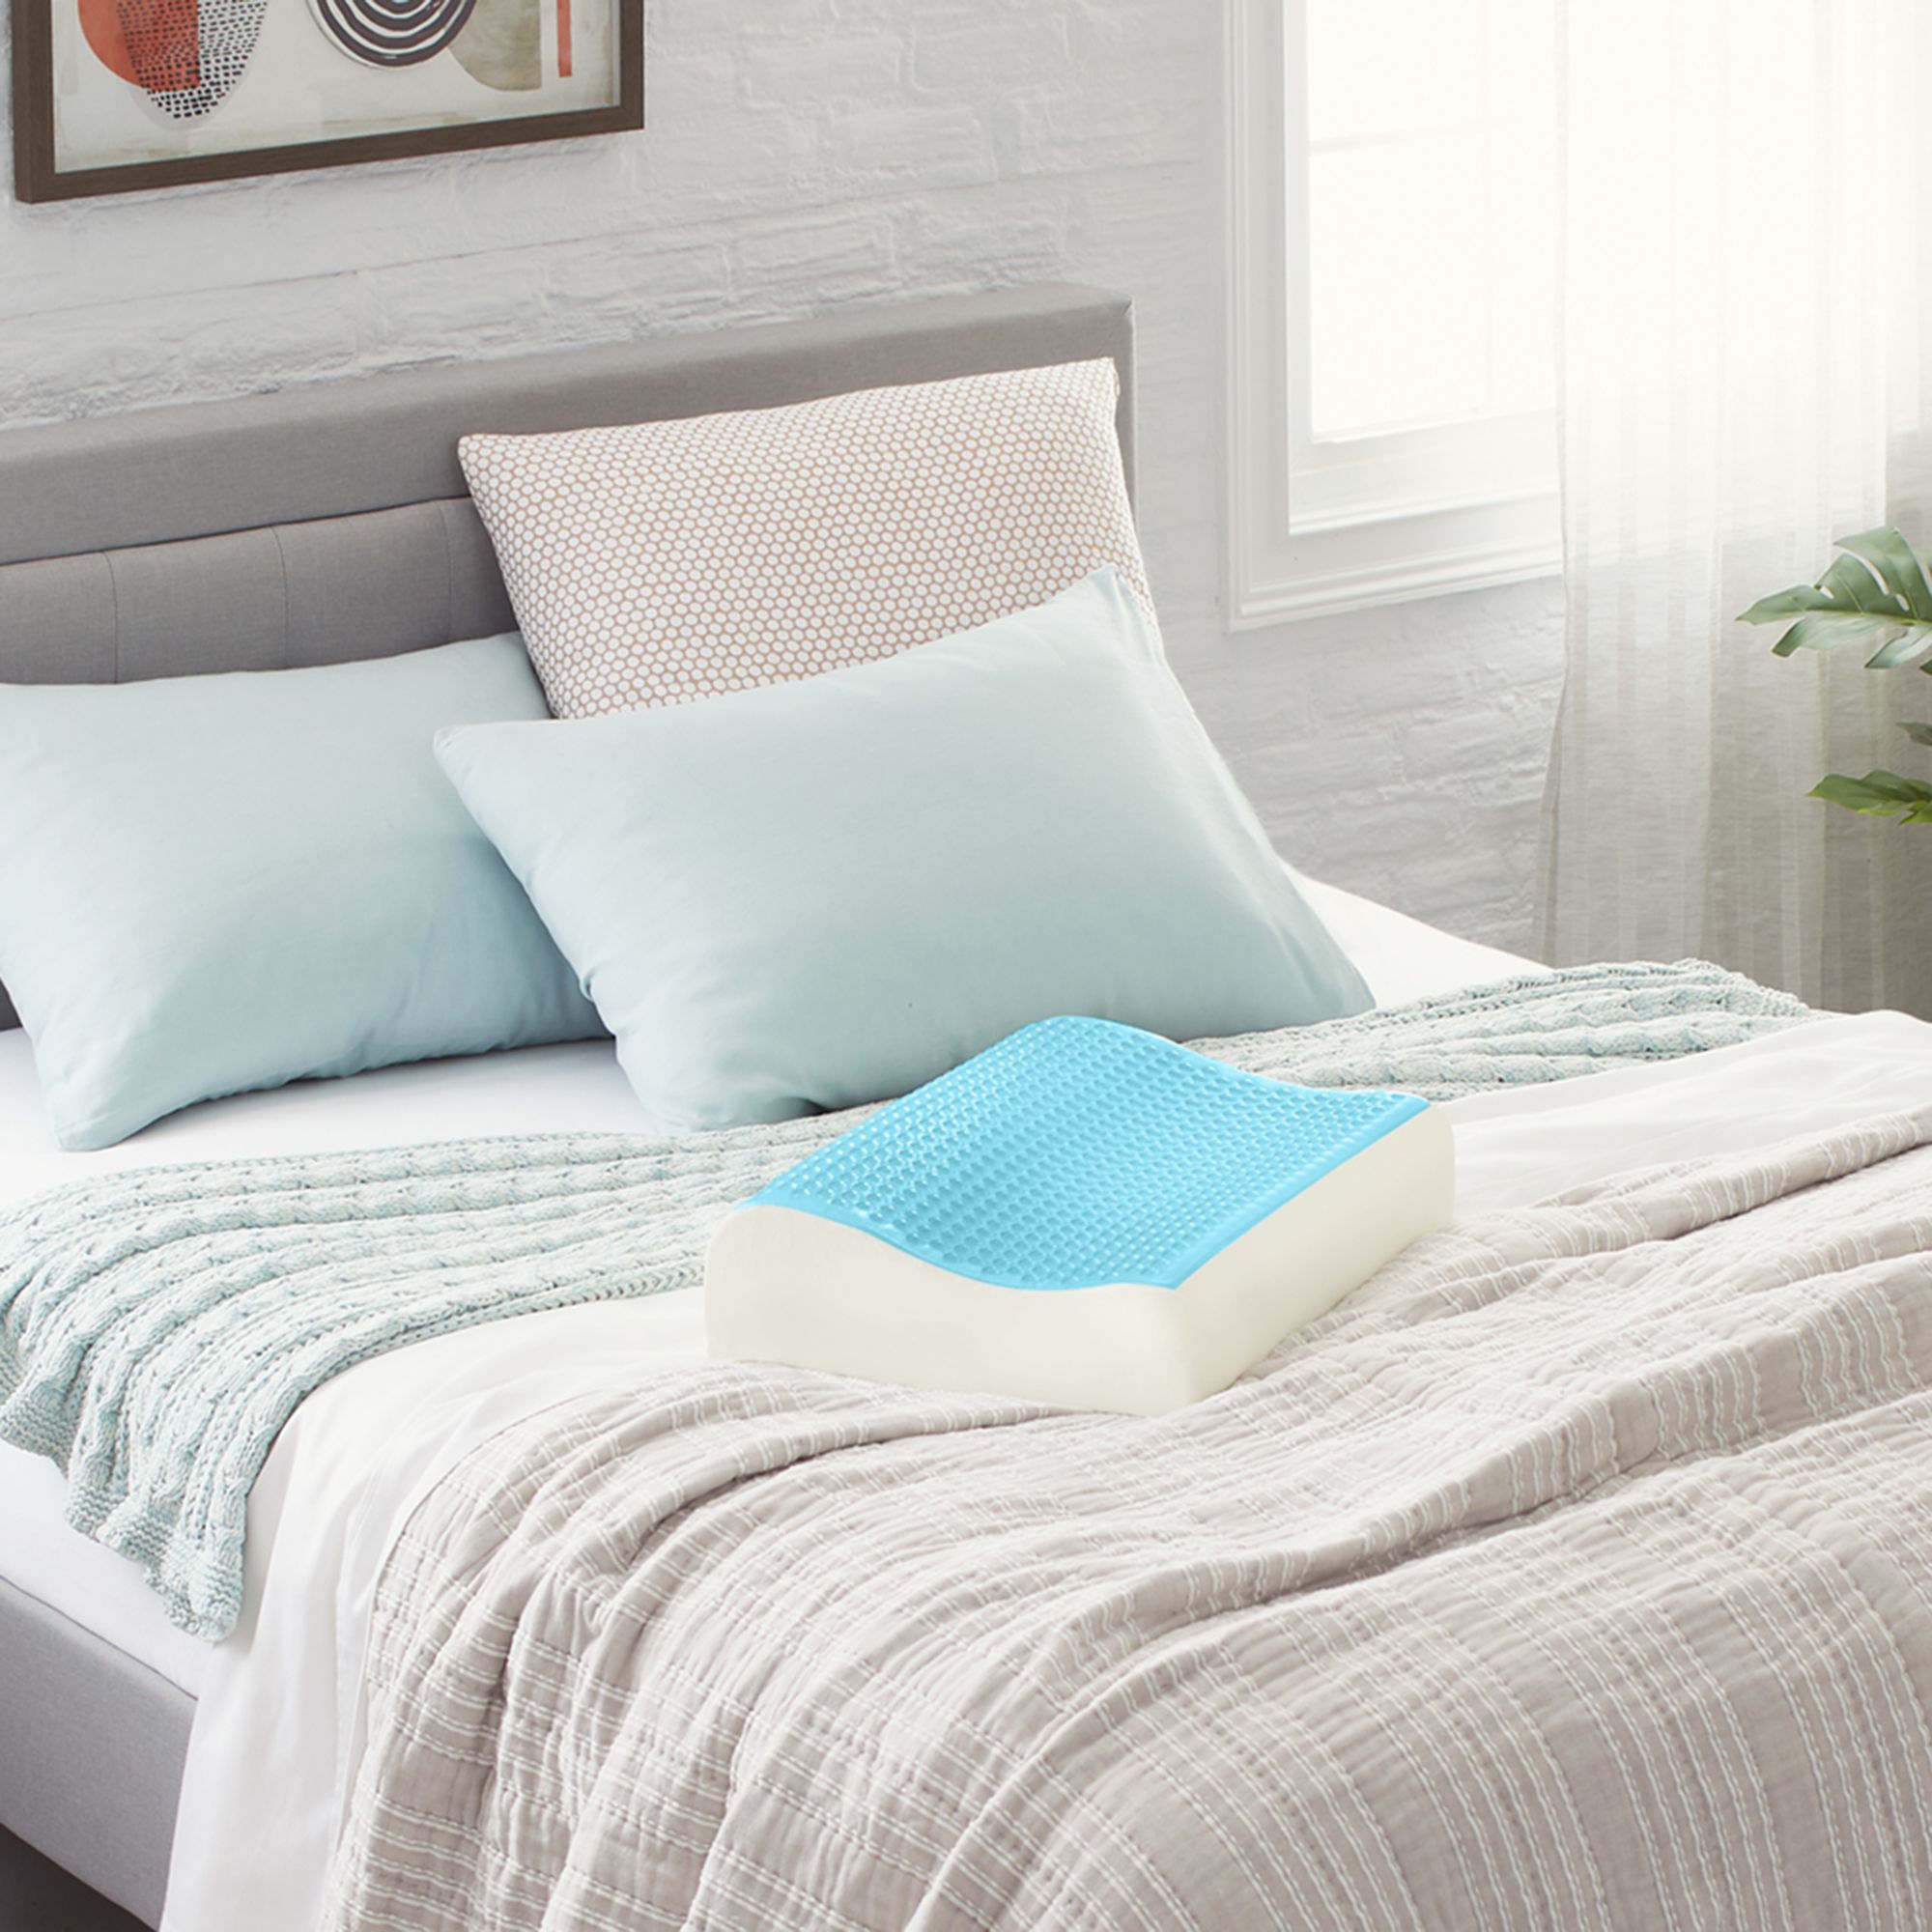 Comfort Revolution's Cooling Gel Pillow!